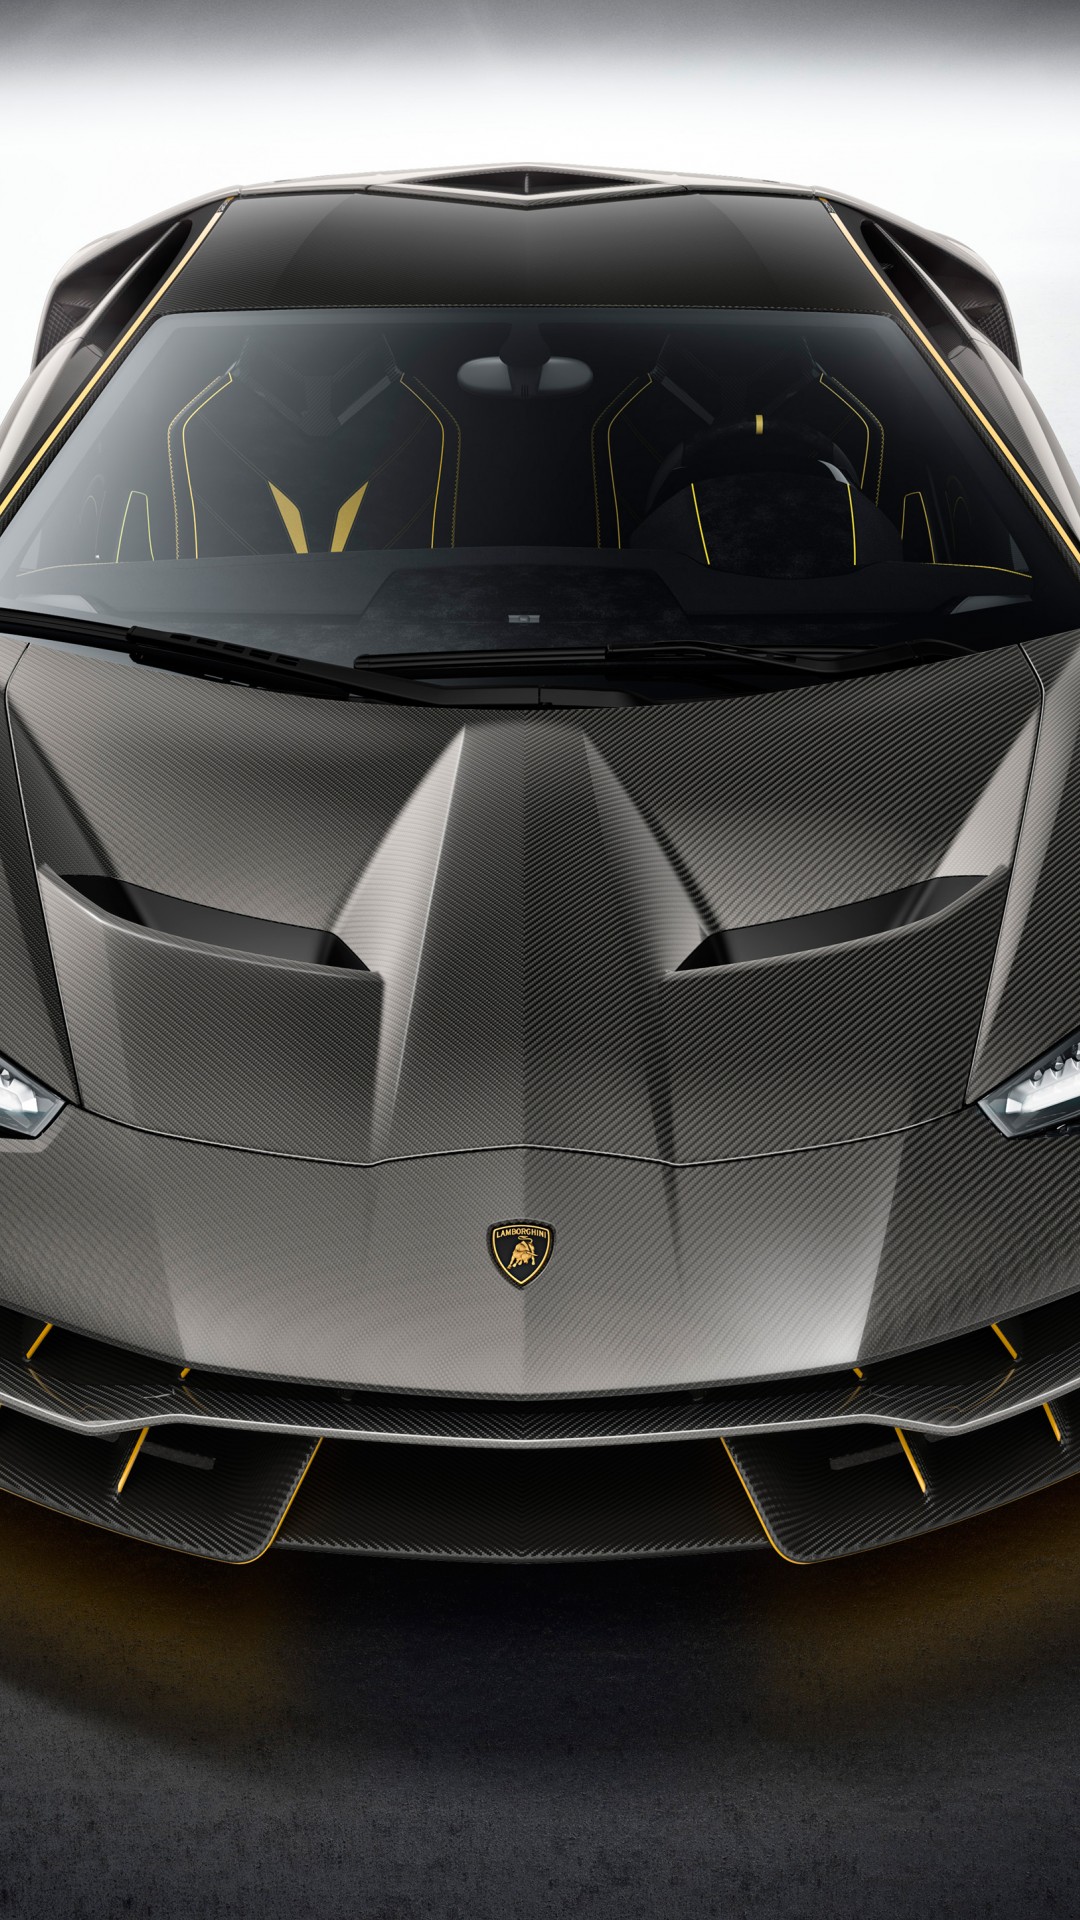 2016 Lamborghini Centenario, вид спереди 1080x1920